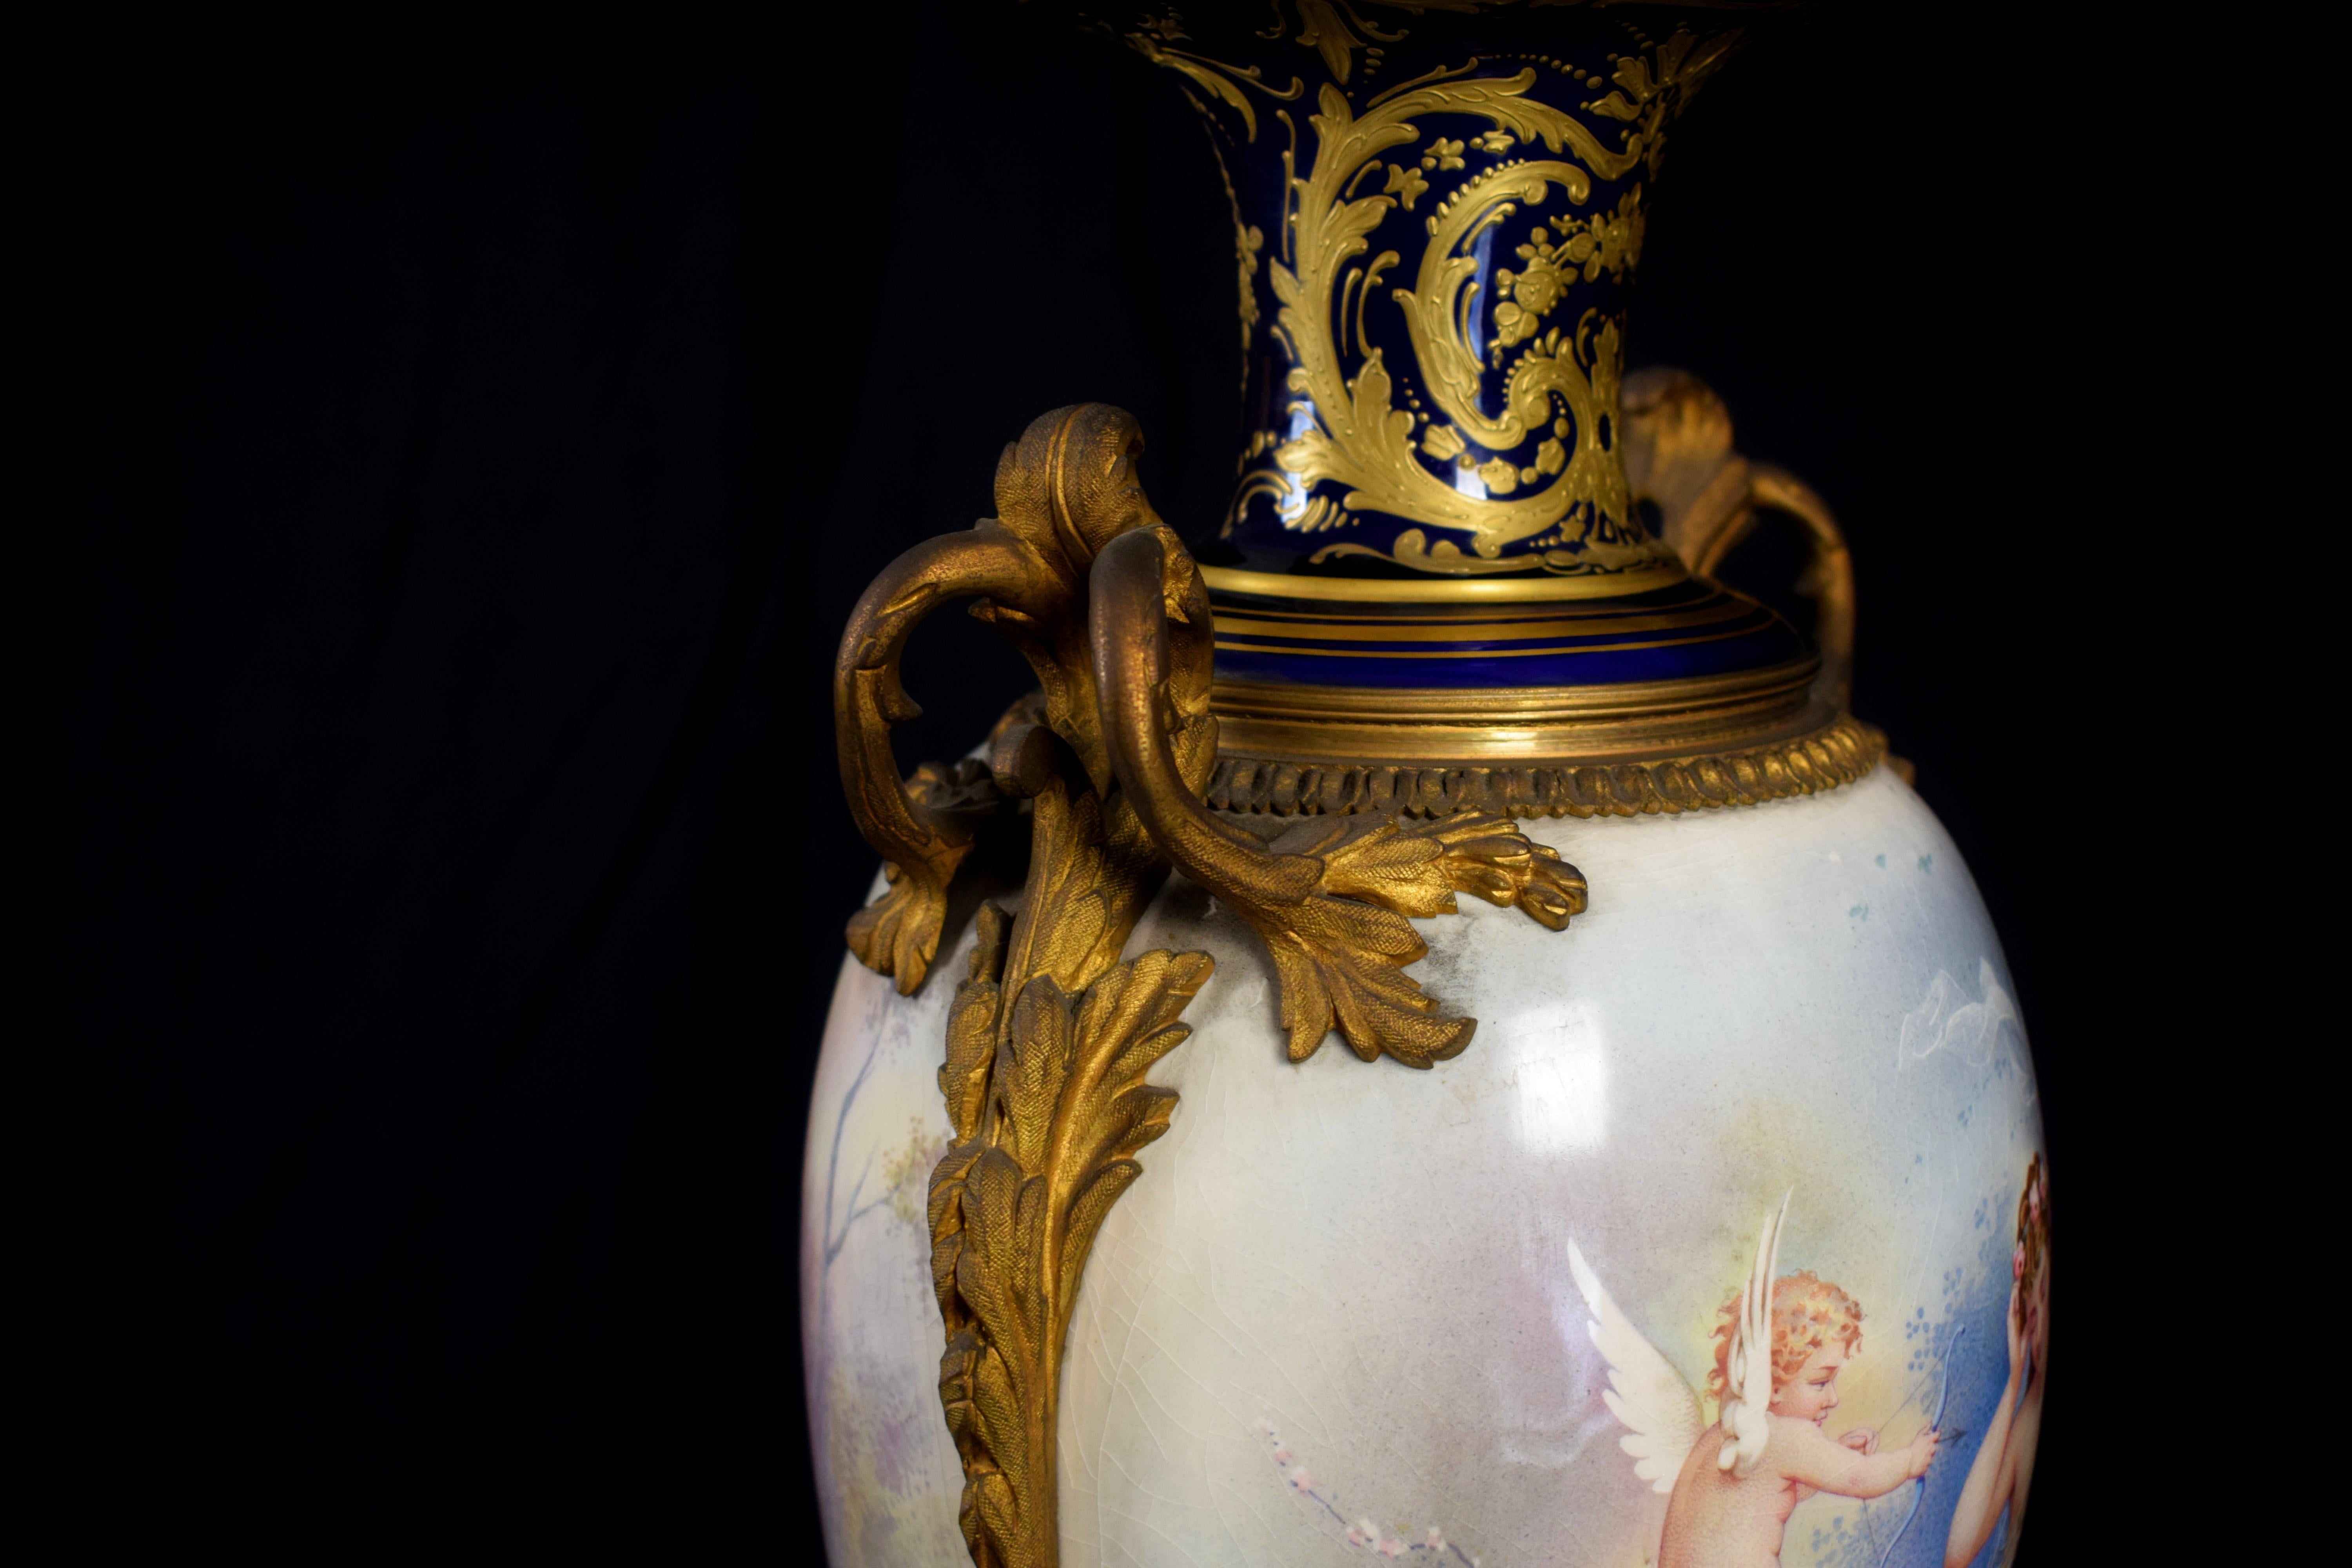 19th Century Large Ormolu-Mounted Sèvres Stile Porcelain Cobalt-Blue Vase and Cover